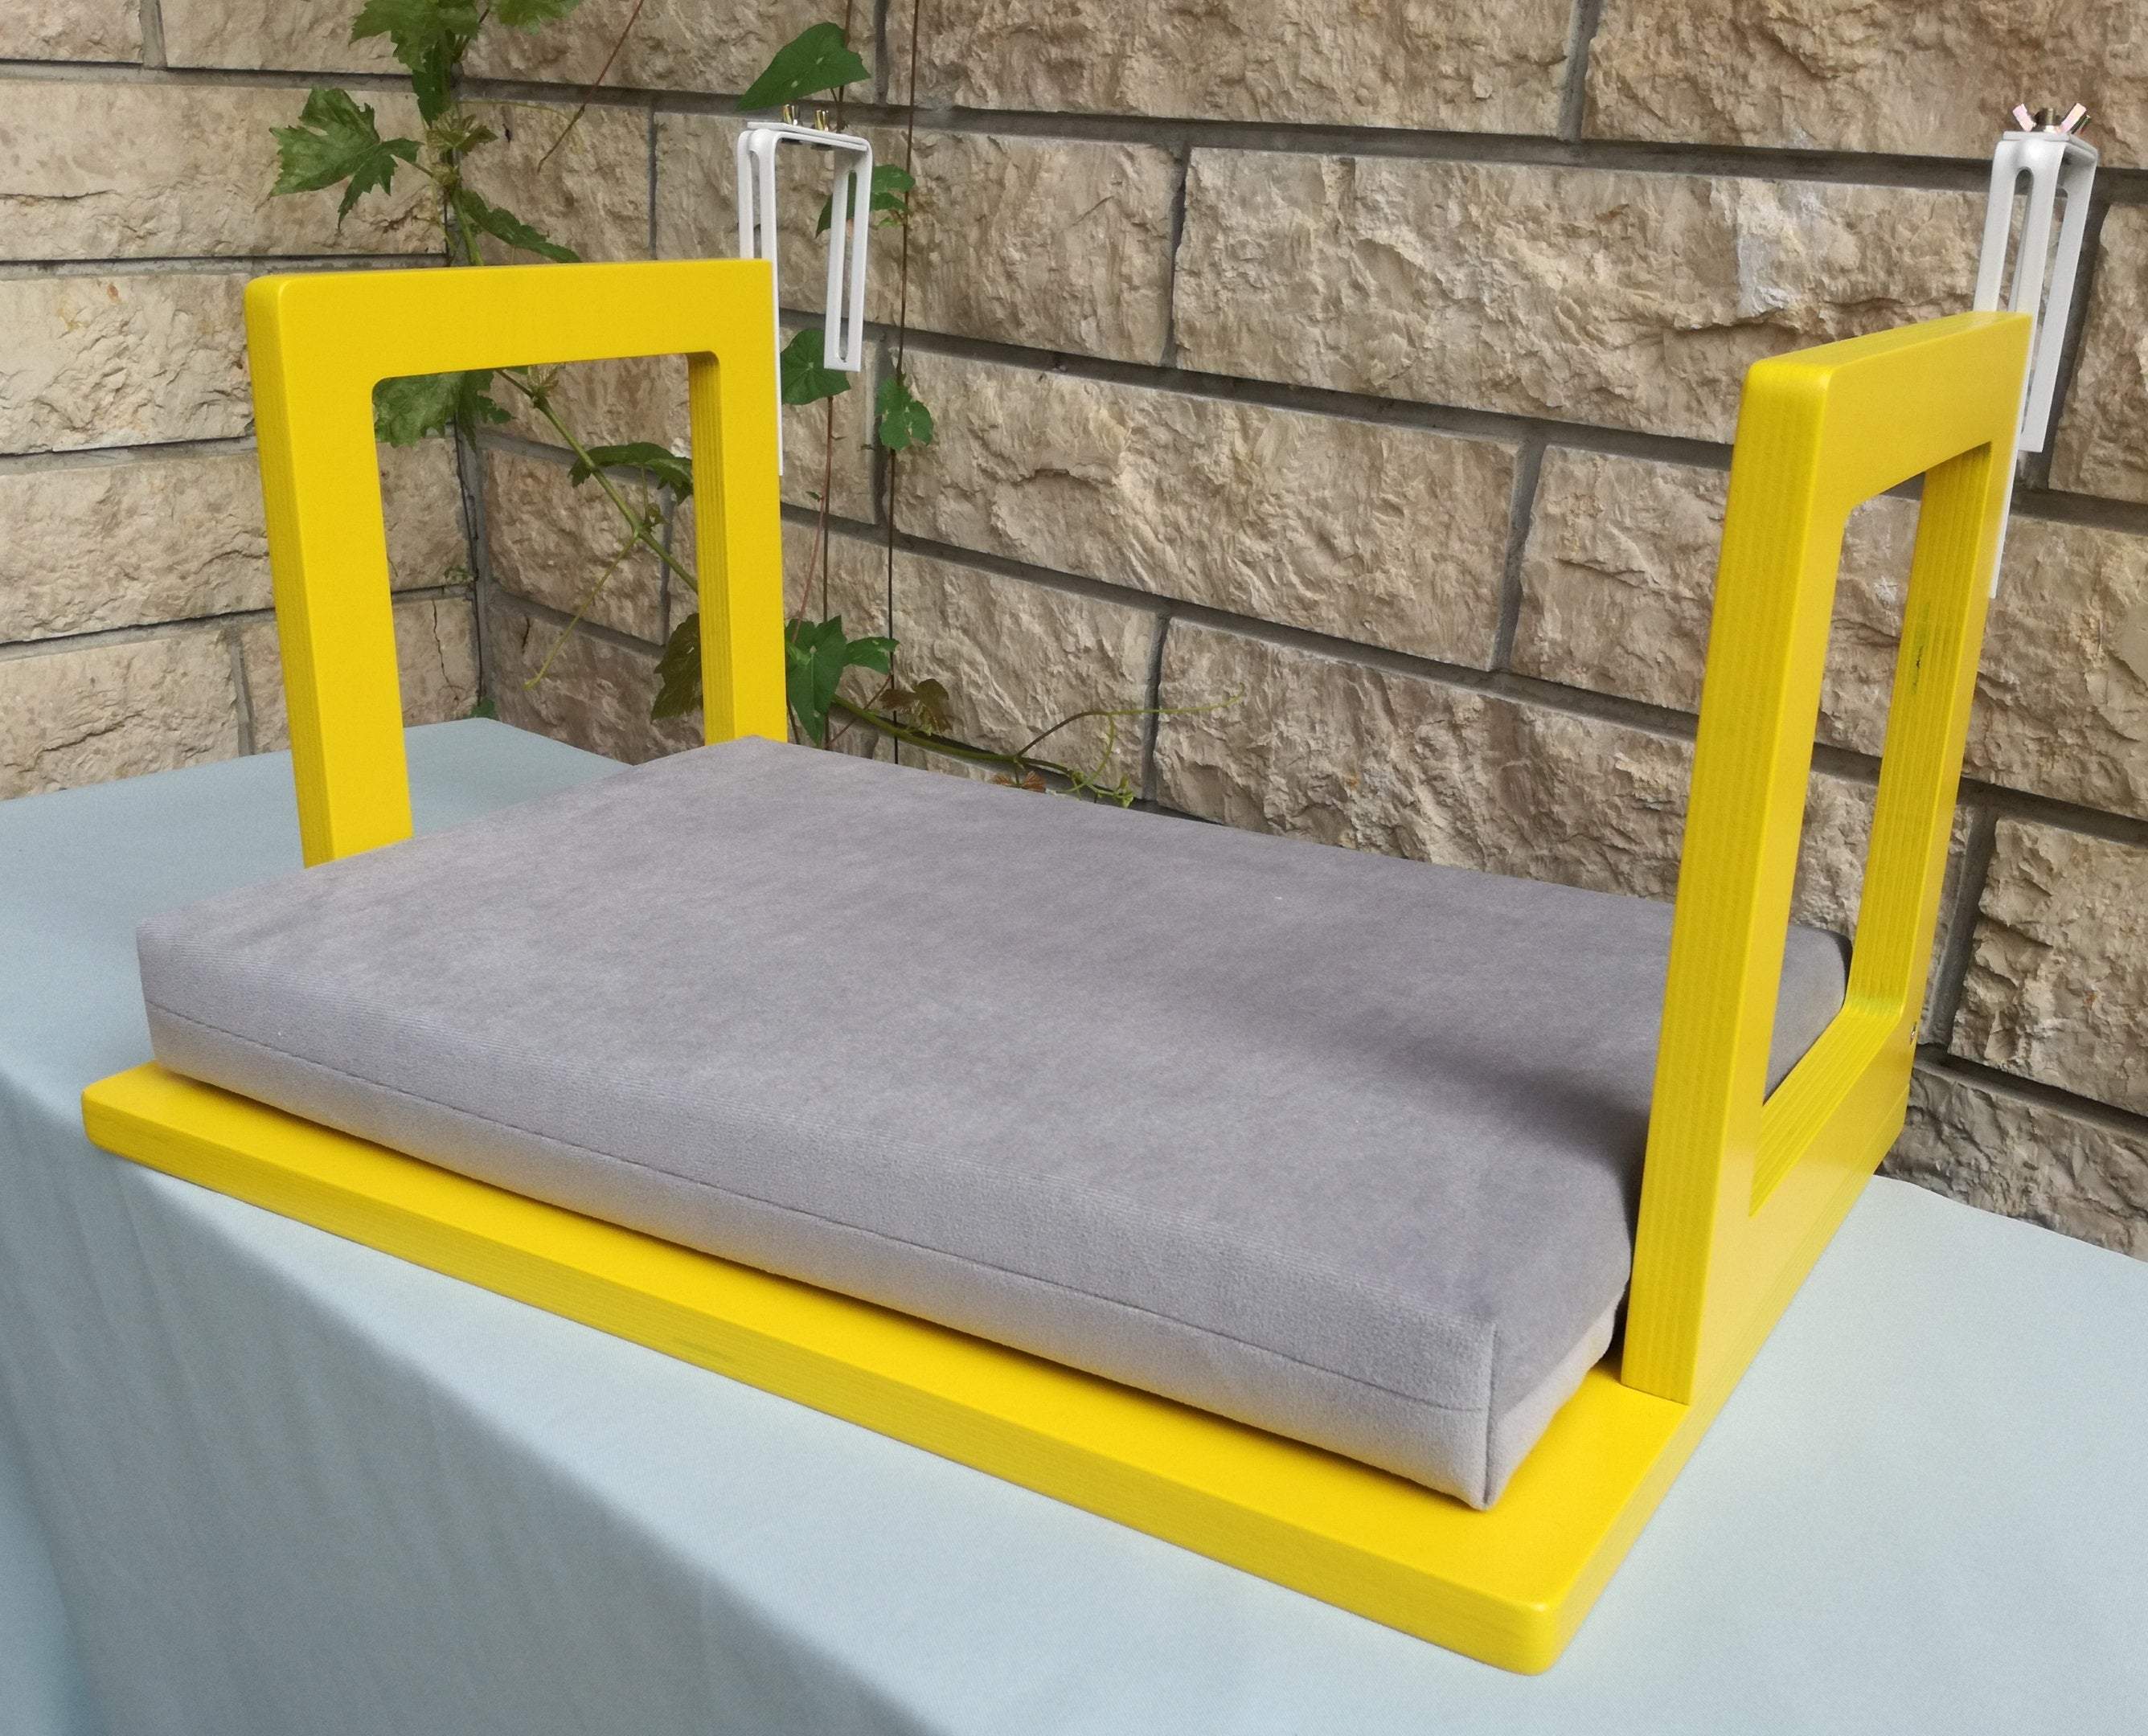 Cat Radiator Bed Hammock - Toasty Flat - Scratchy Things Premium Pet Furniture